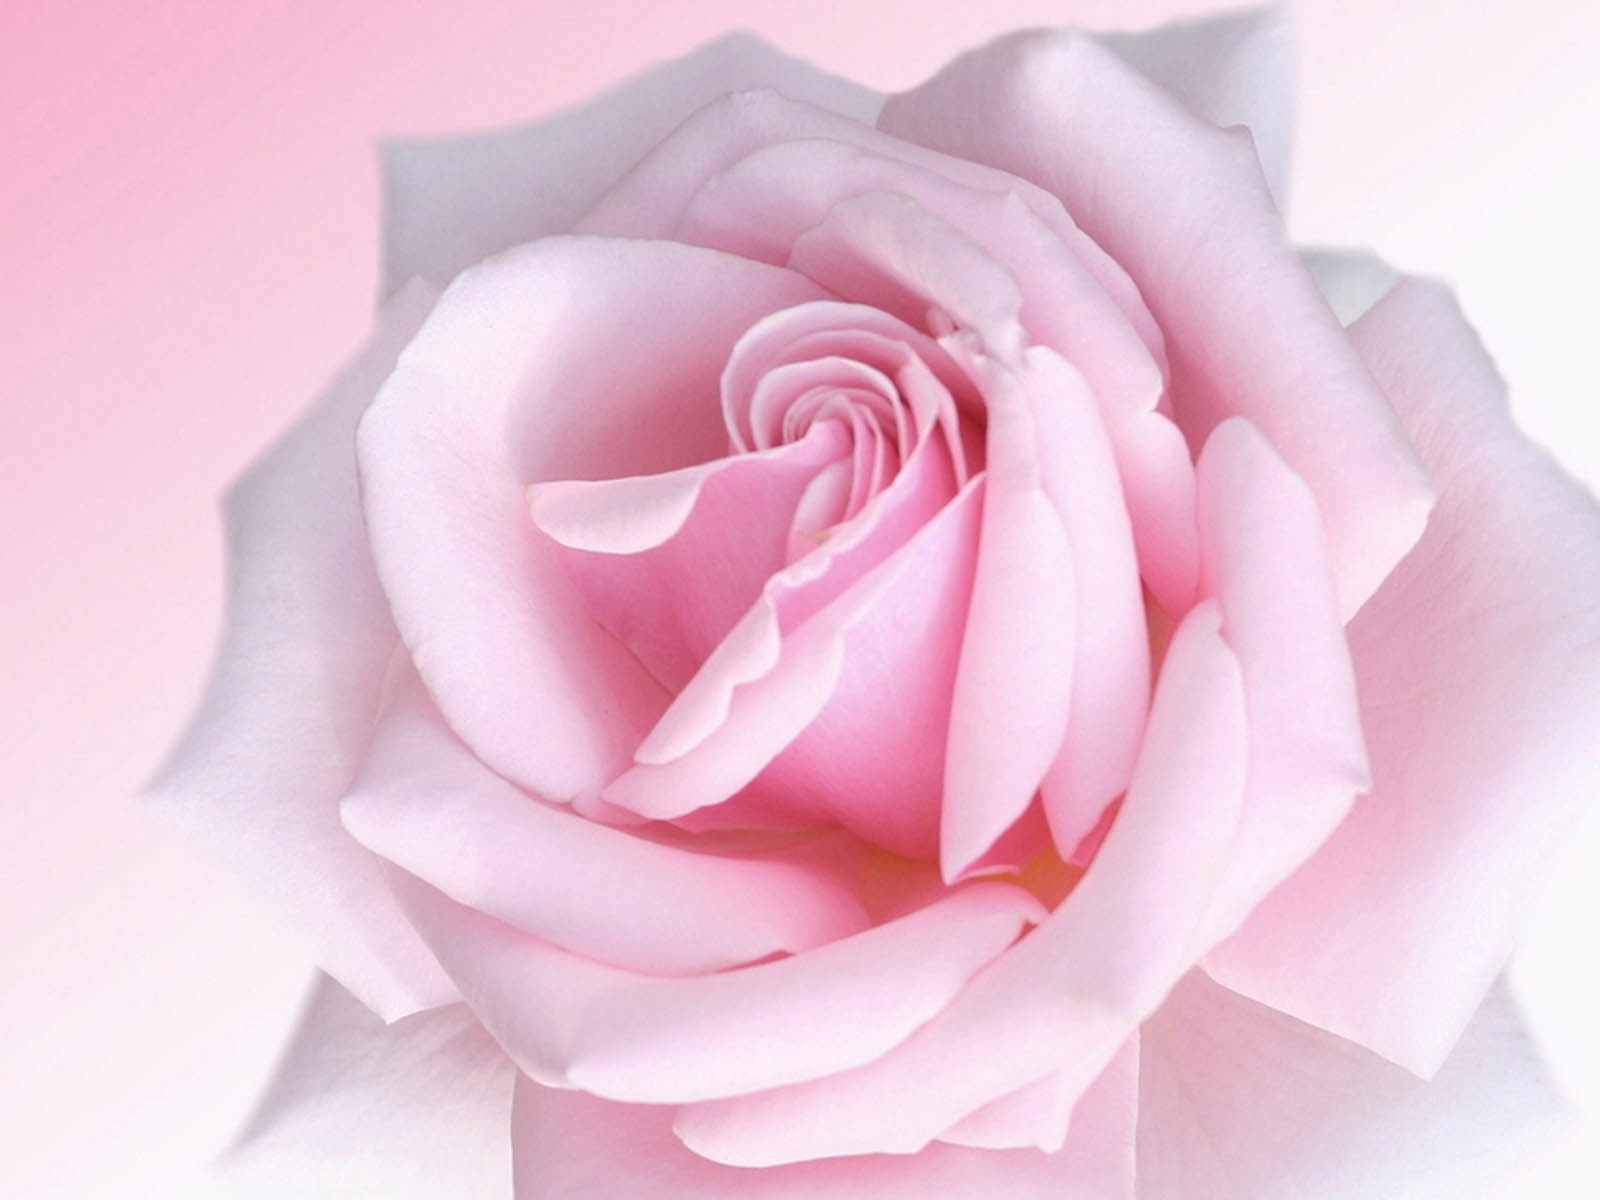 the pink rose wallpapers pink rose desktop wallpapers pink rose